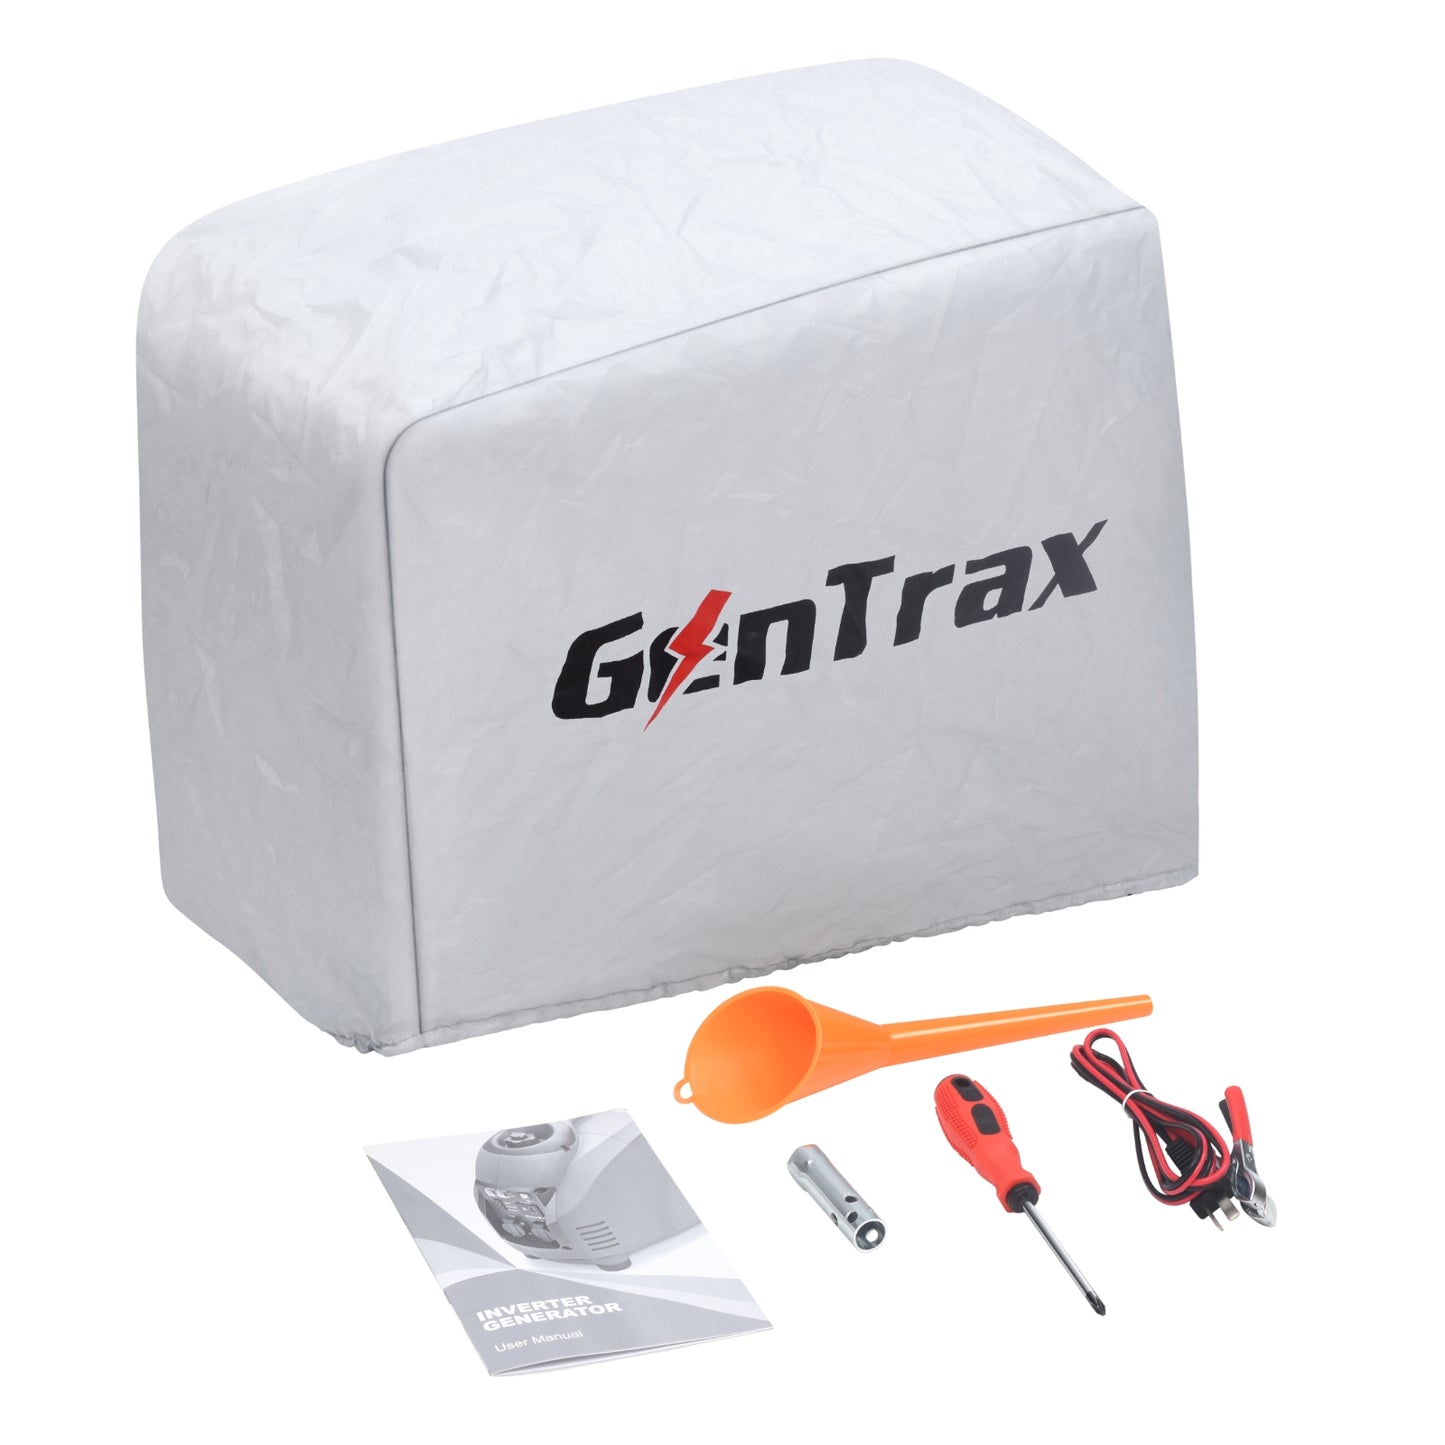 Gentrax GT2500 Inverter Generator